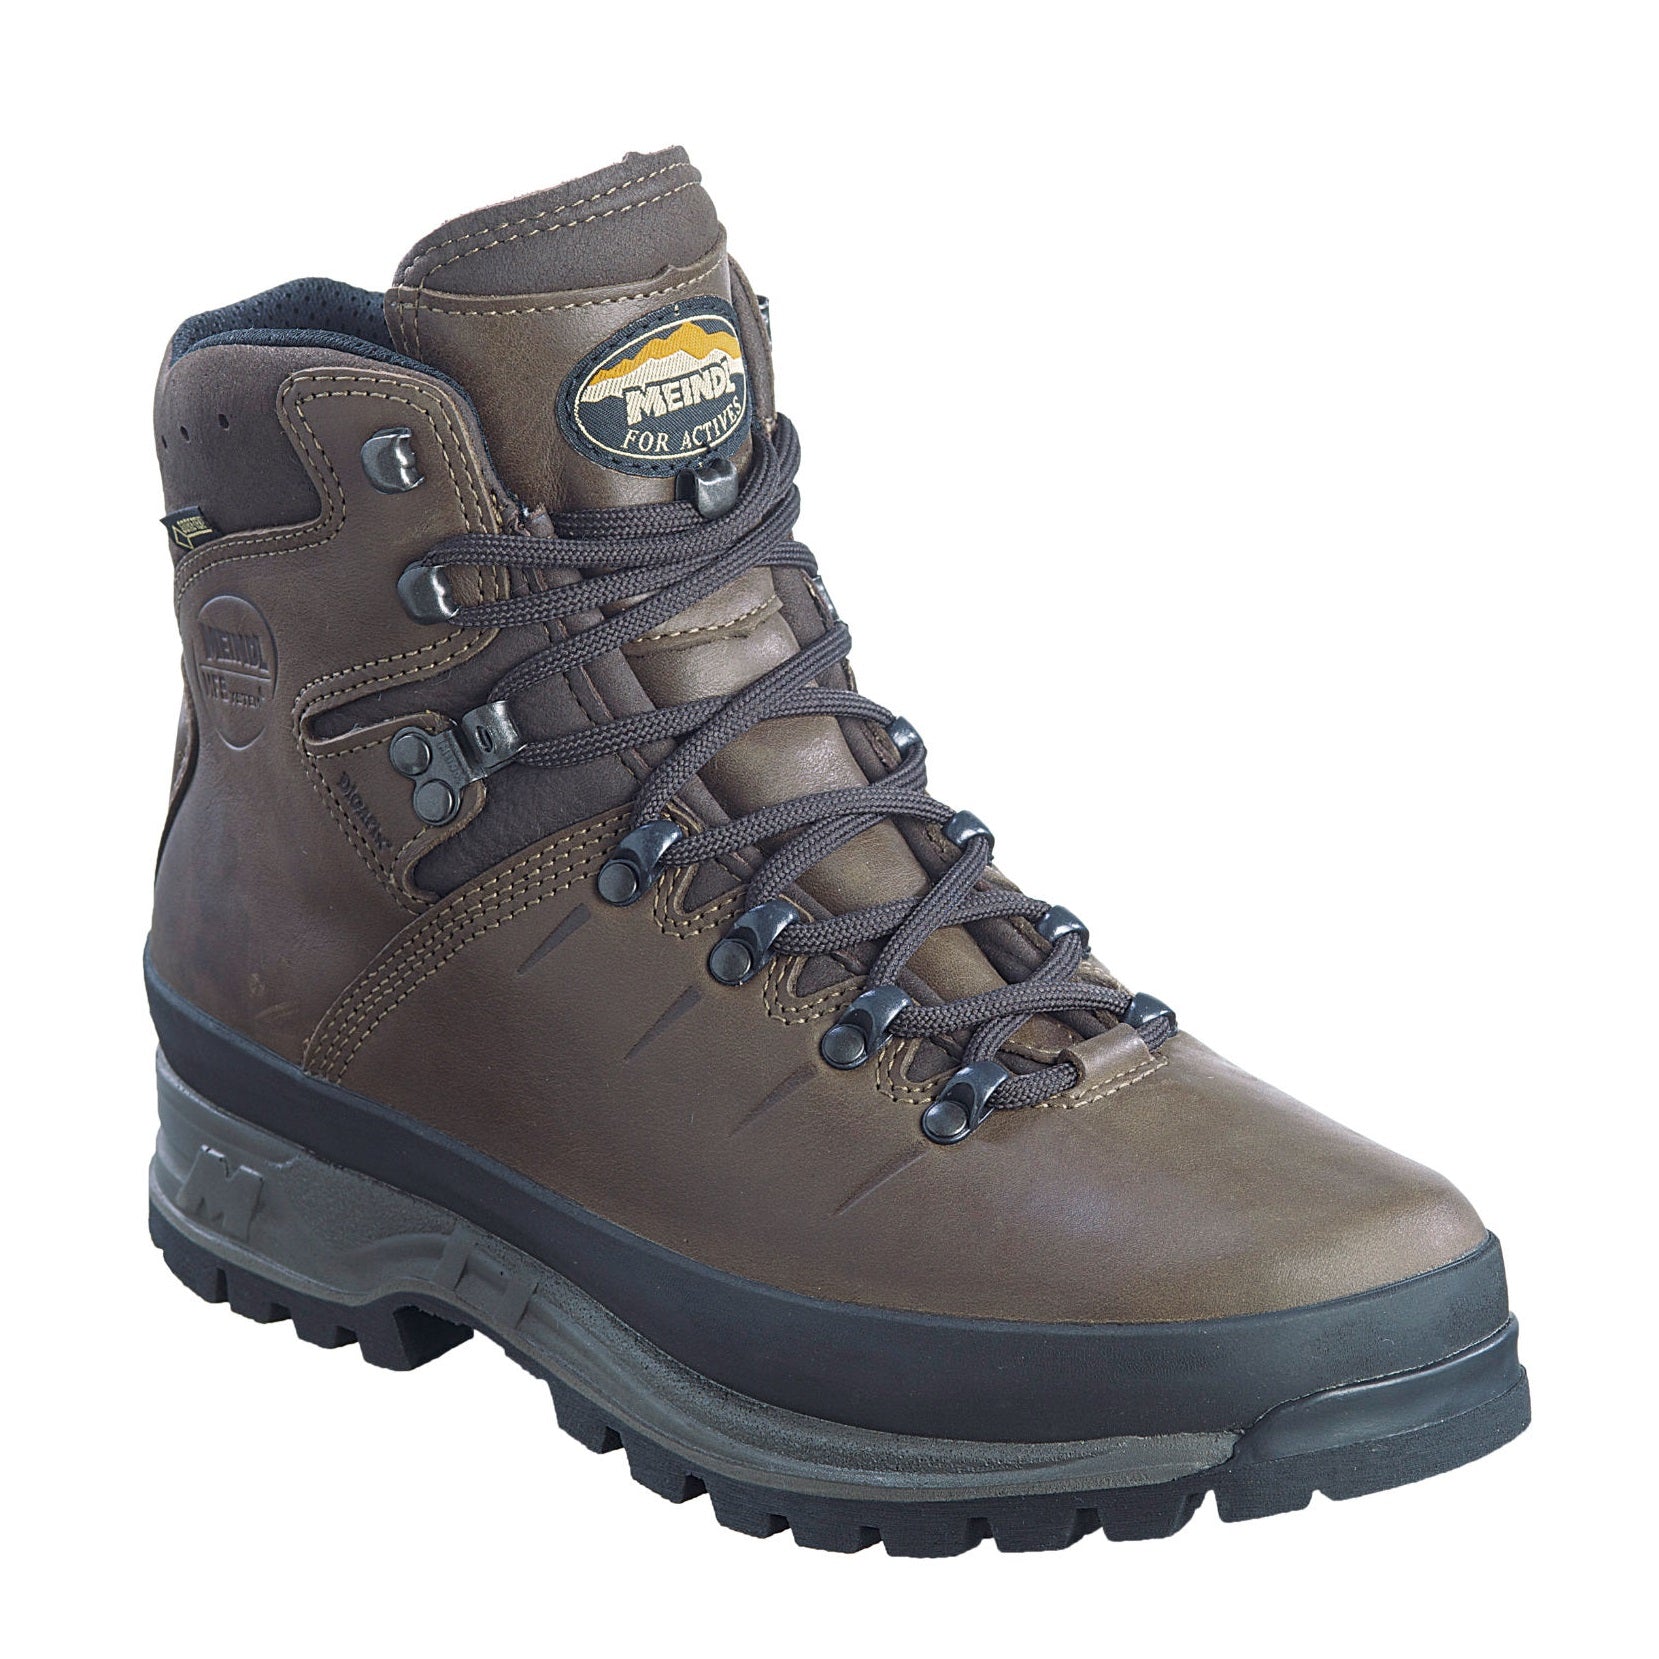 30% off - MEINDL Bhutan MFS Gore-Tex Walking Boots - Mens - Dark Brown - Size: UK 10.5 & 13